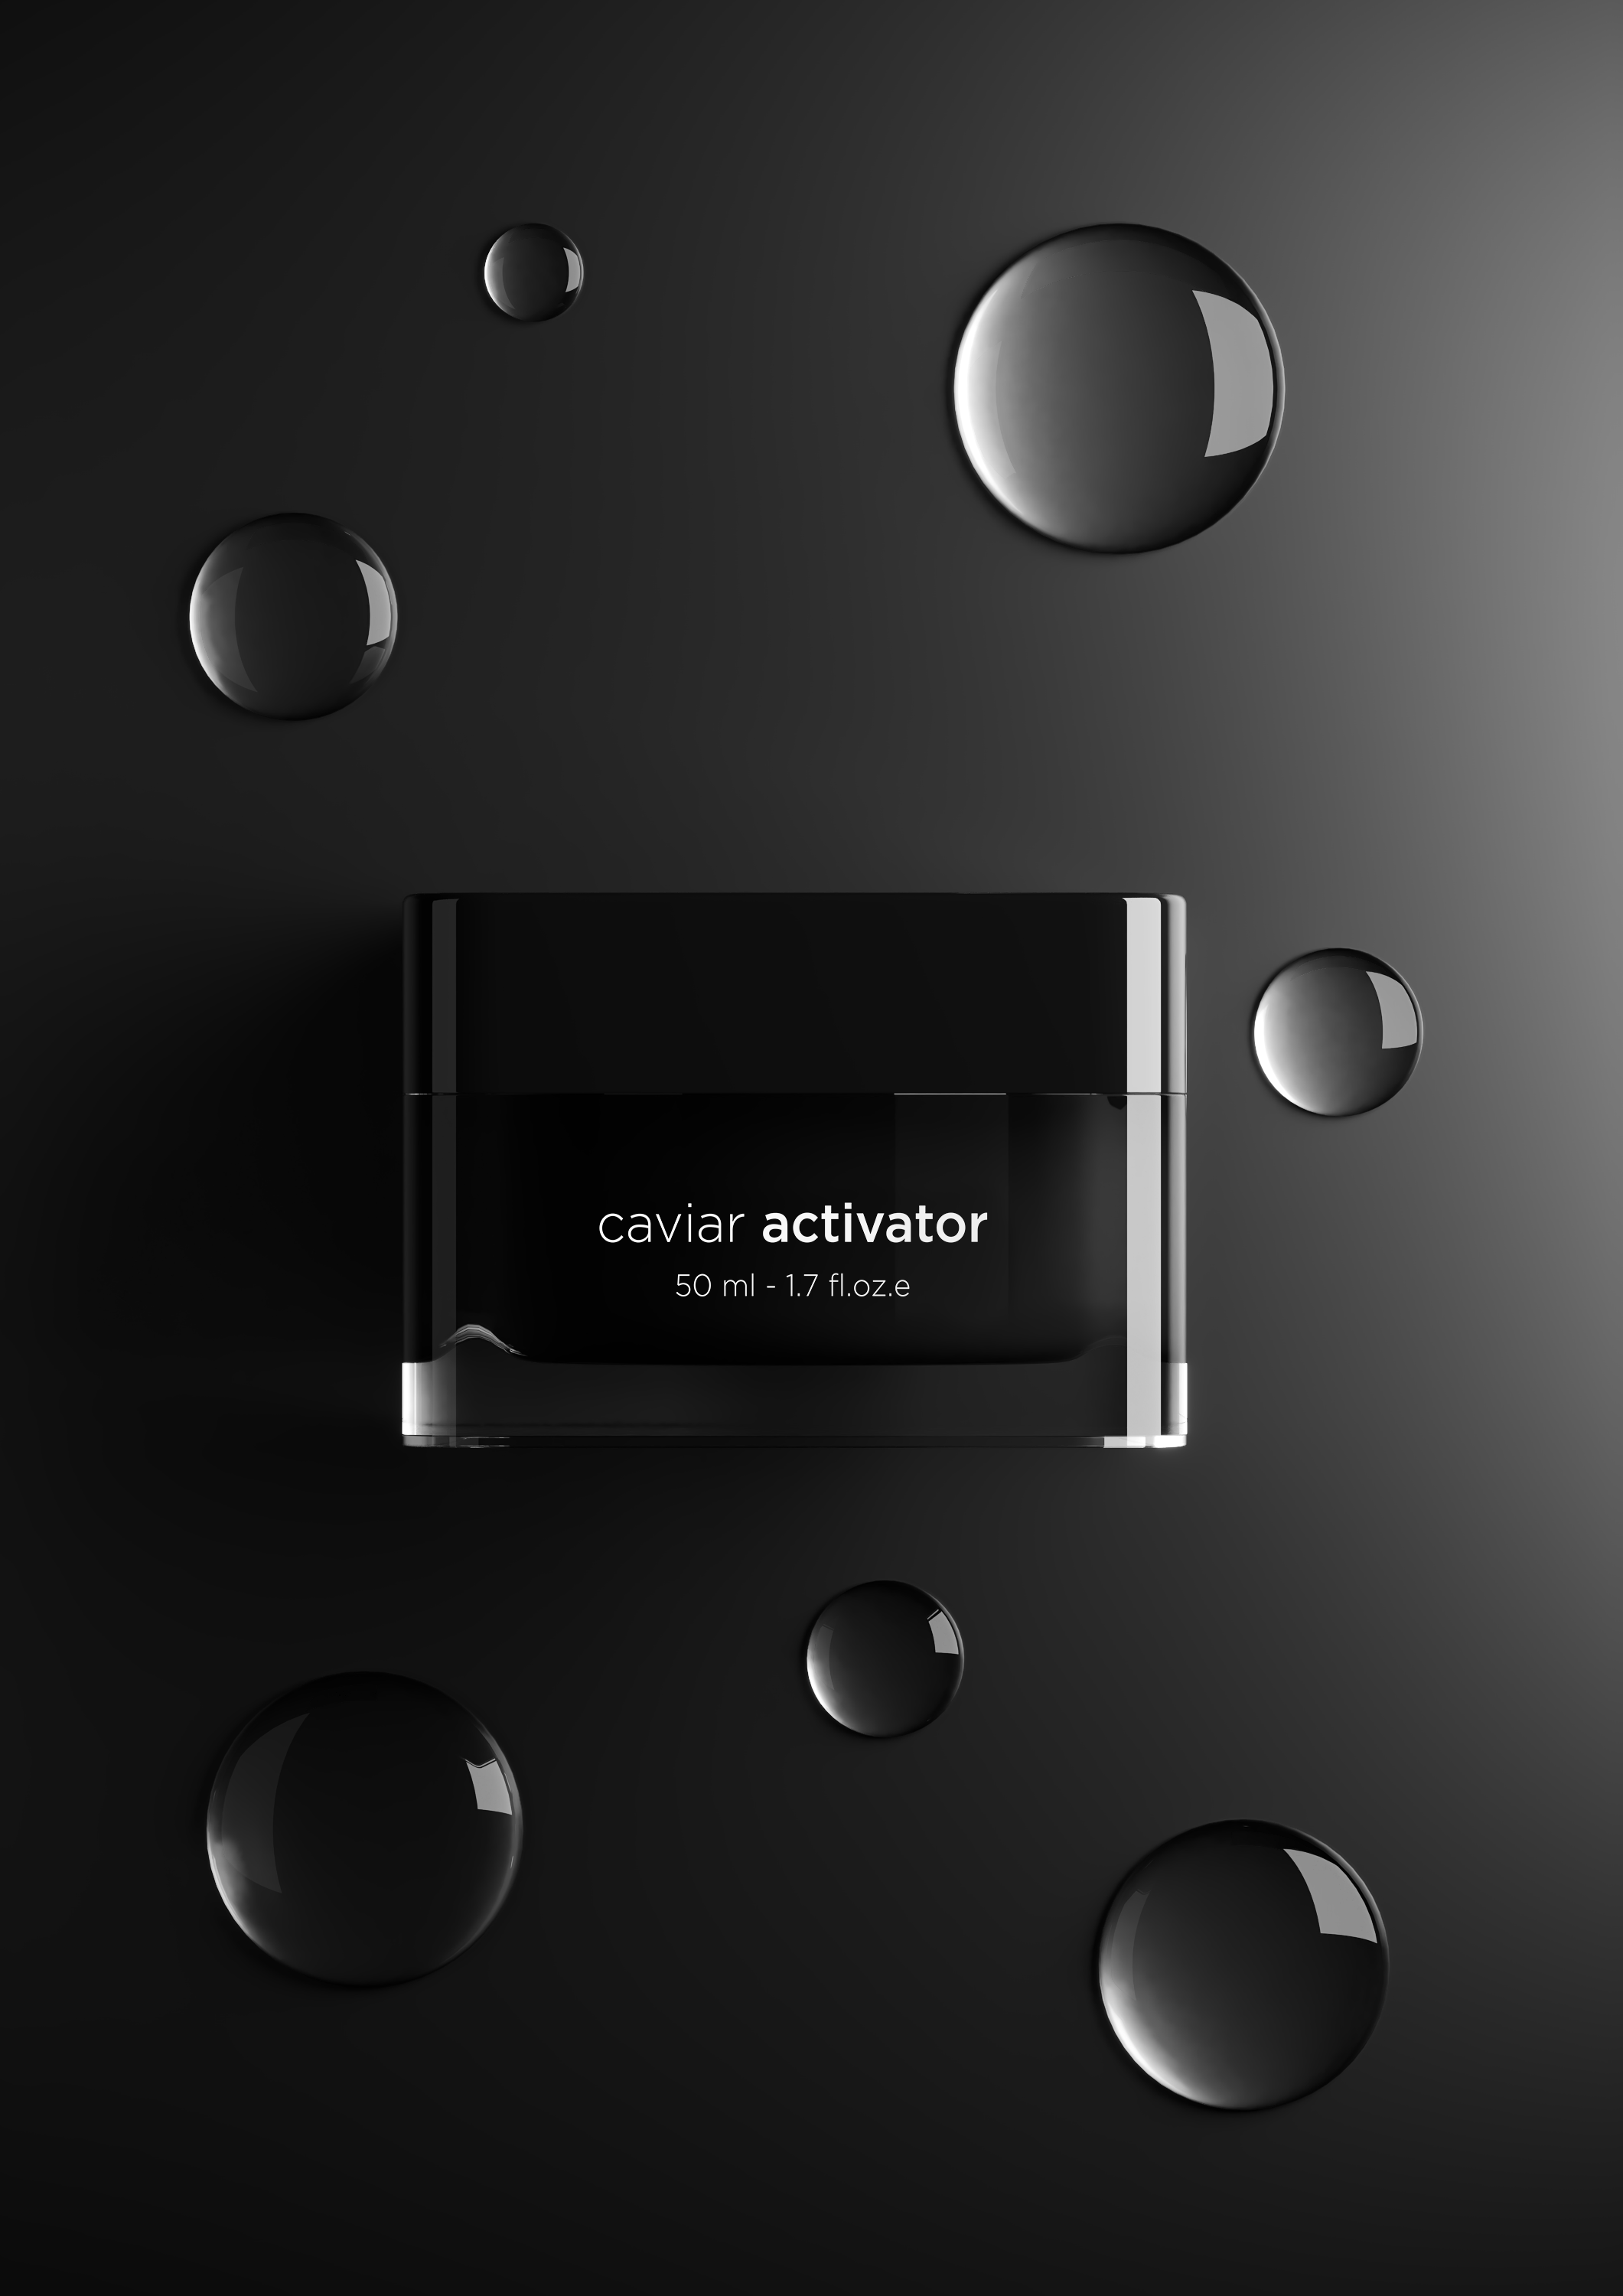 Caviar activator